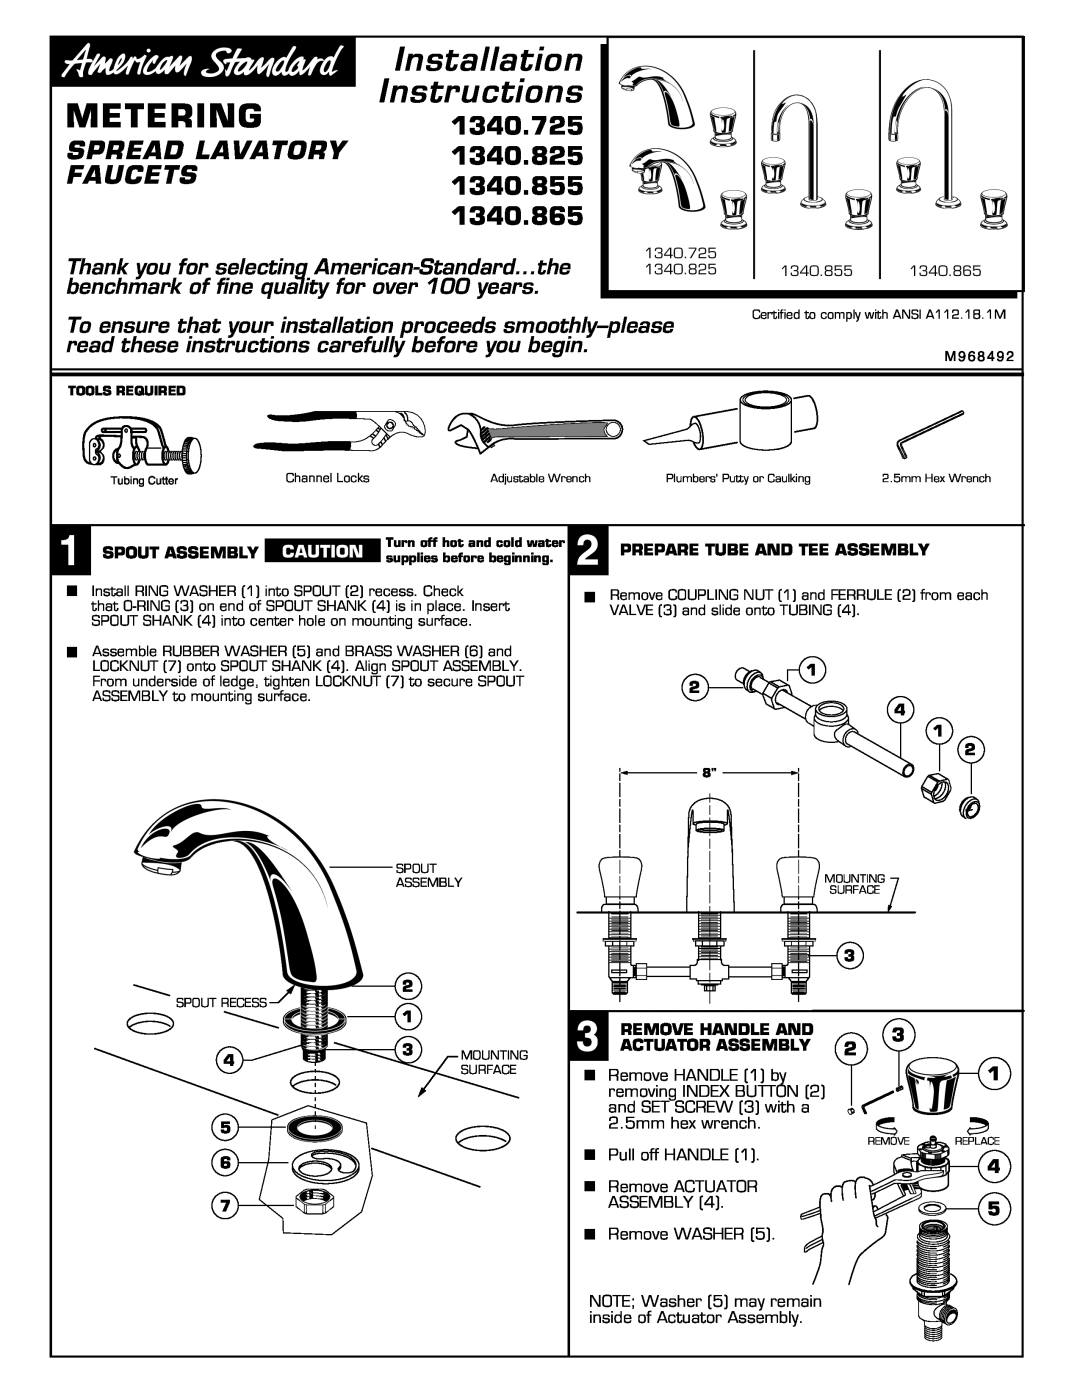 American Standard 1340.865, 1340.825 installation instructions Spread Lavatory, FAUCETS1340.855, Installation Instructions 